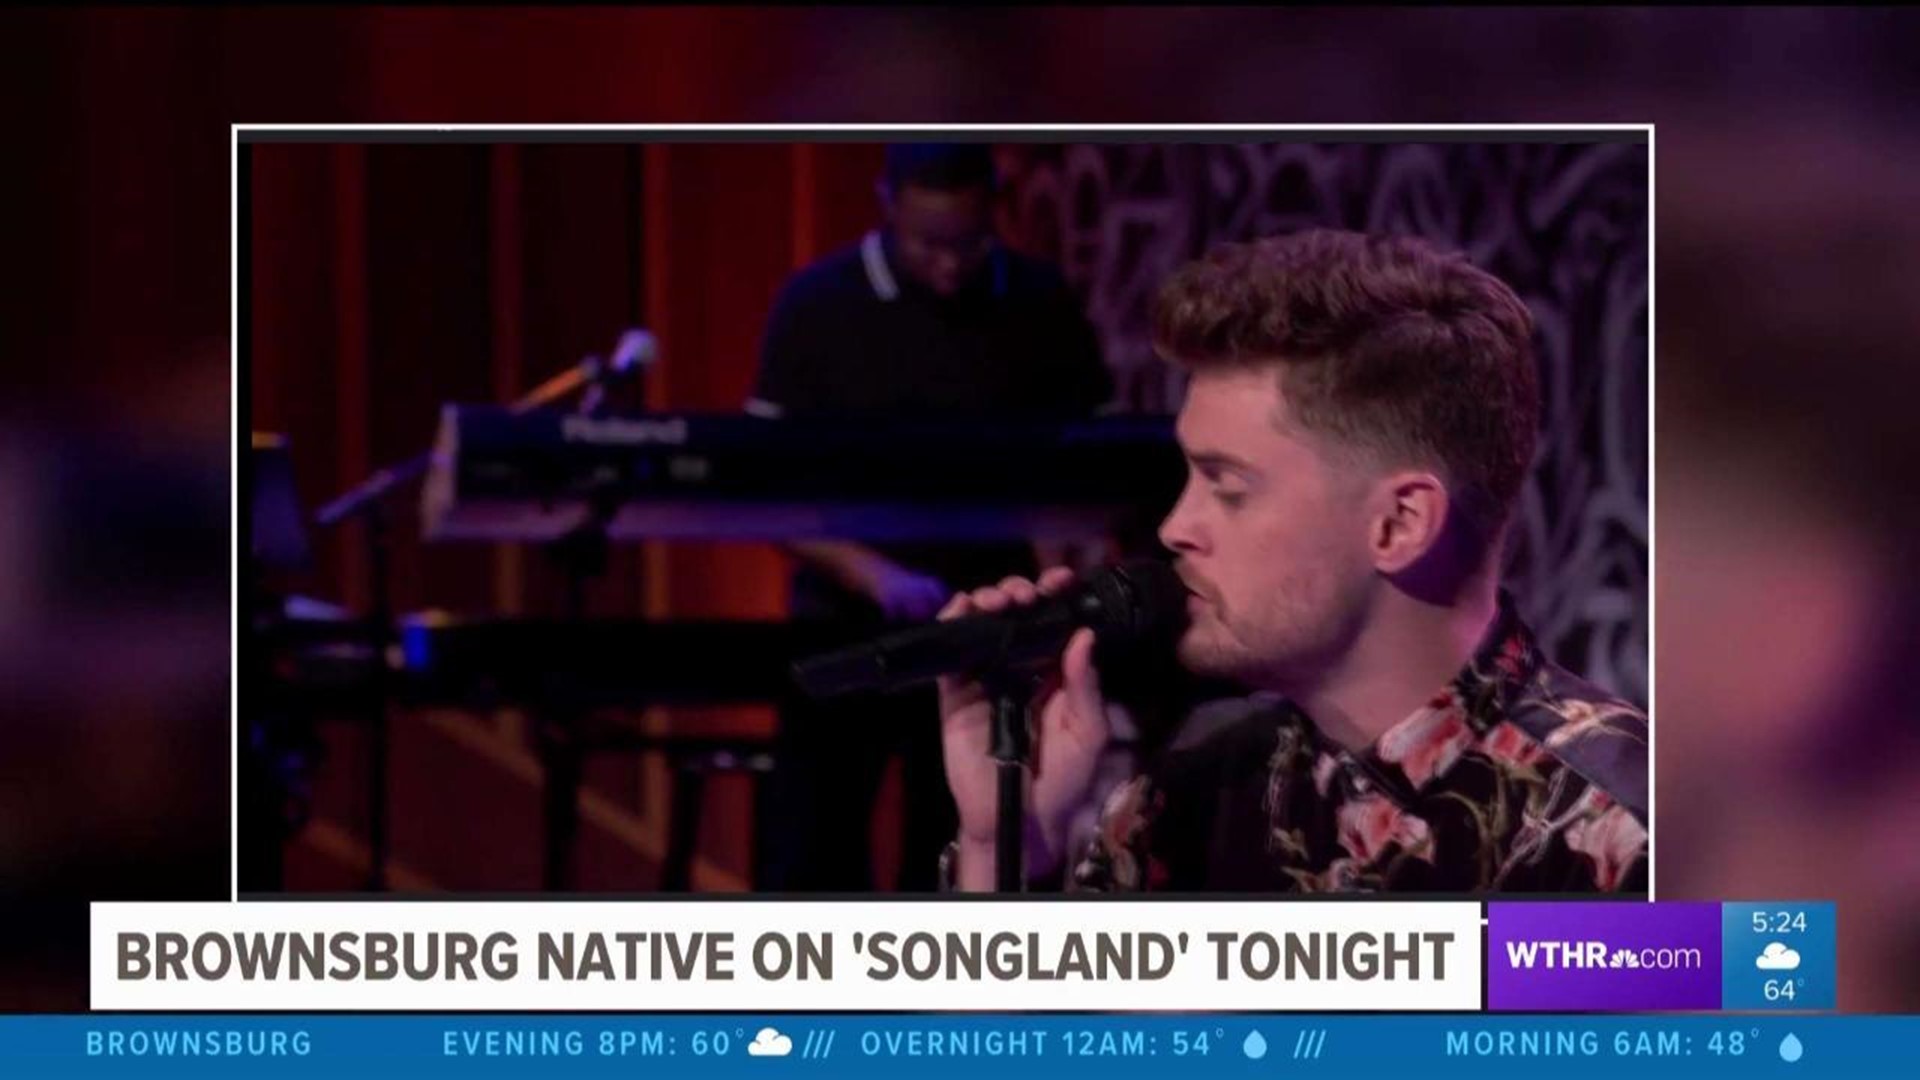 Brownsburg native on 'Songland' tonight